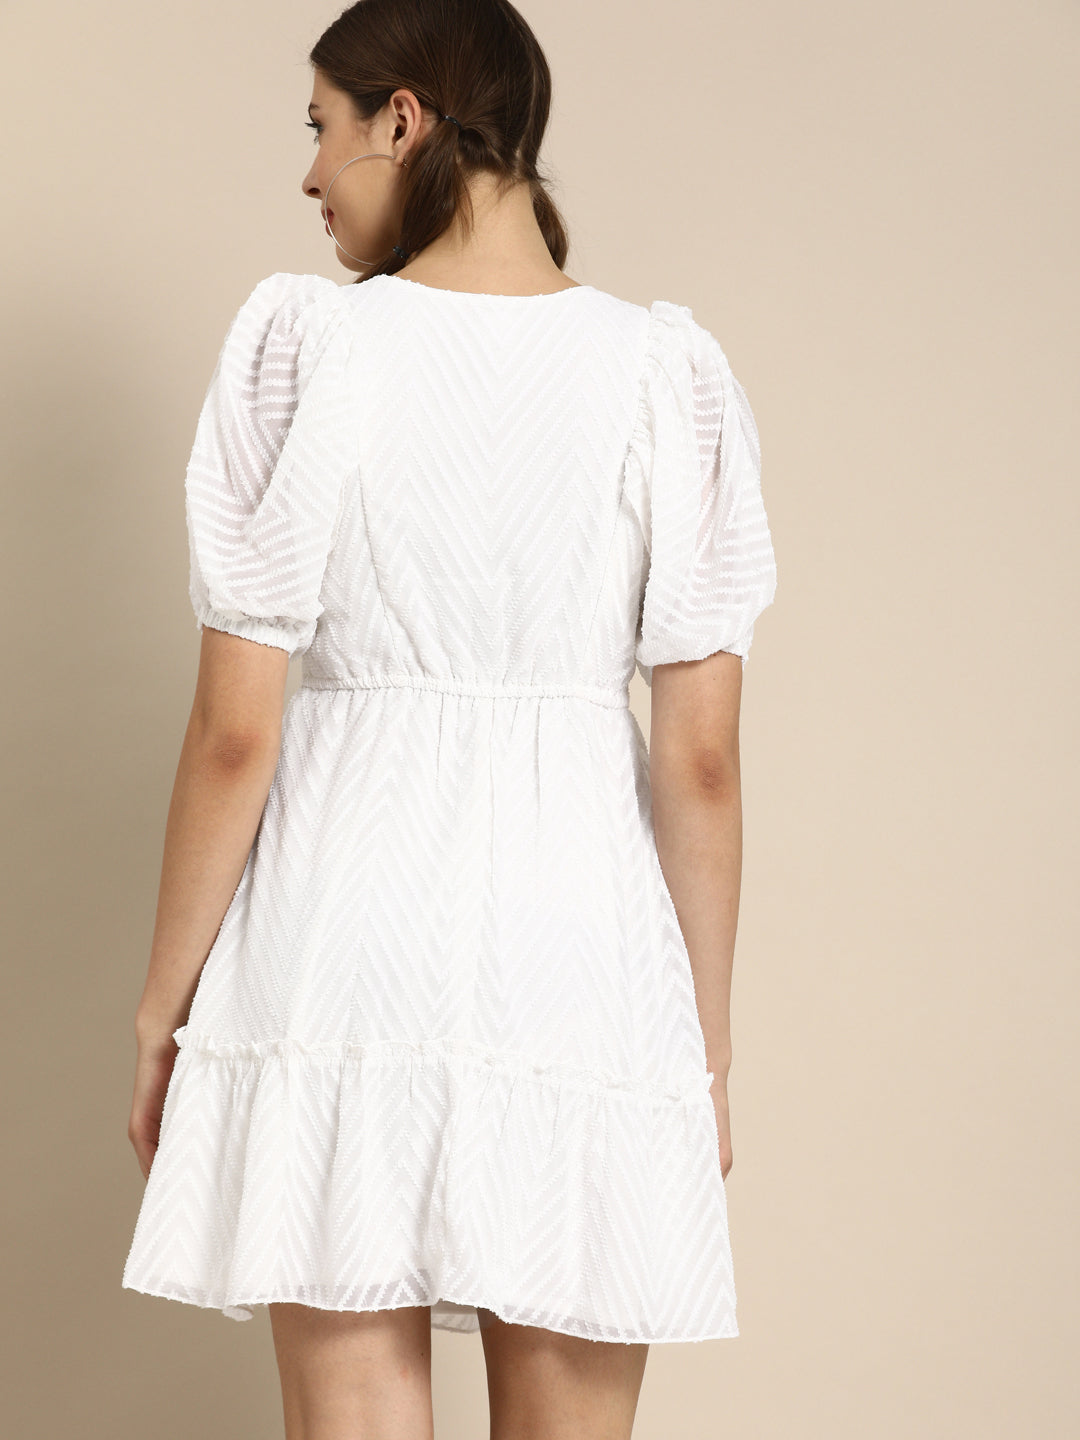 Athena Glorious White Self Design Fit and Flare Dress - Athena Lifestyle